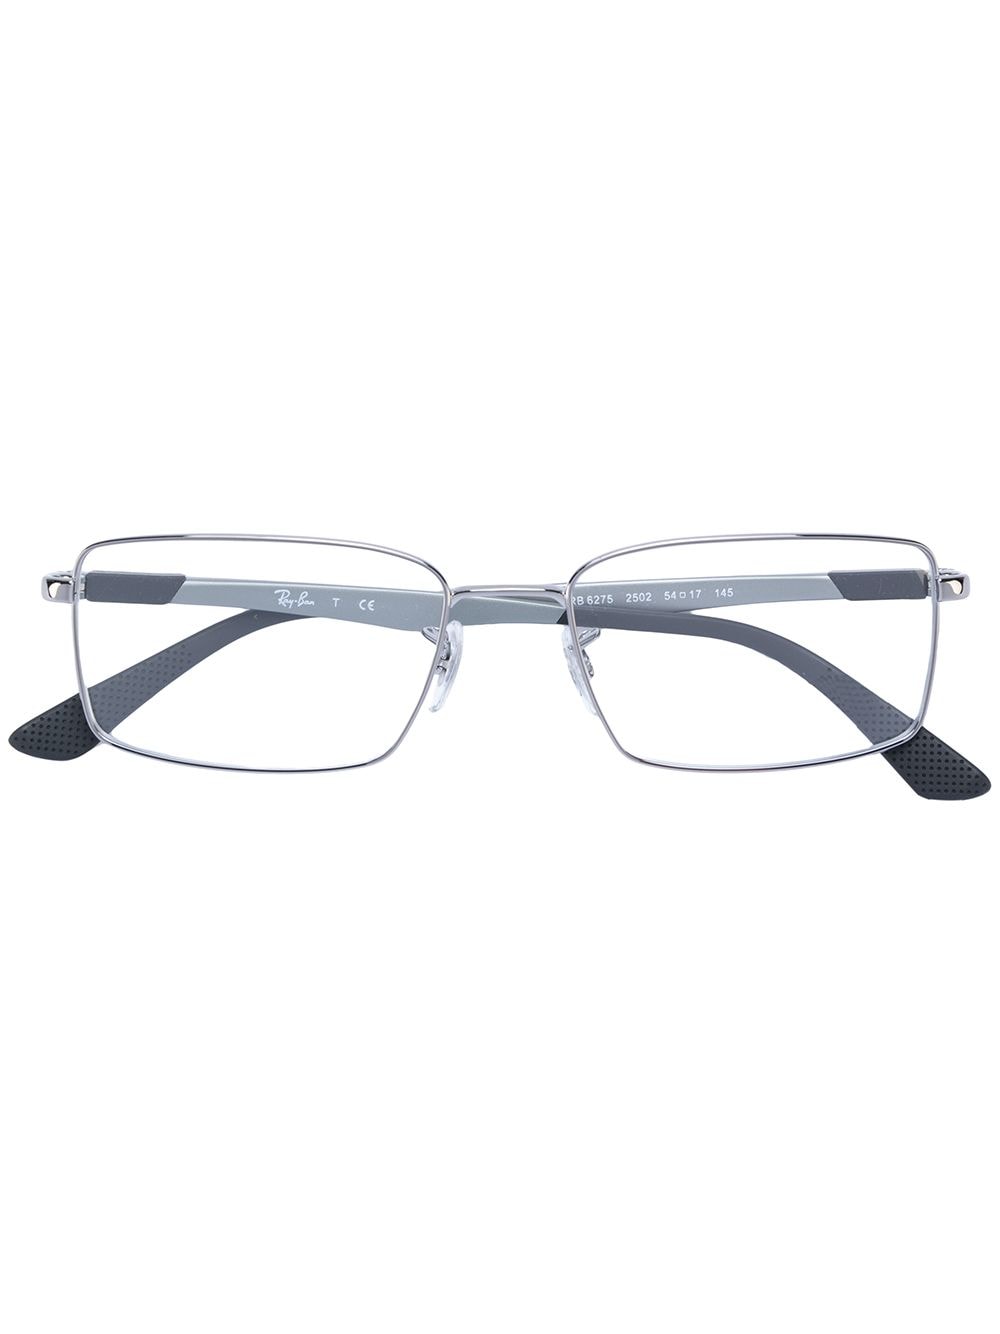 Ray-Ban square shaped glasses - Metallic von Ray-Ban